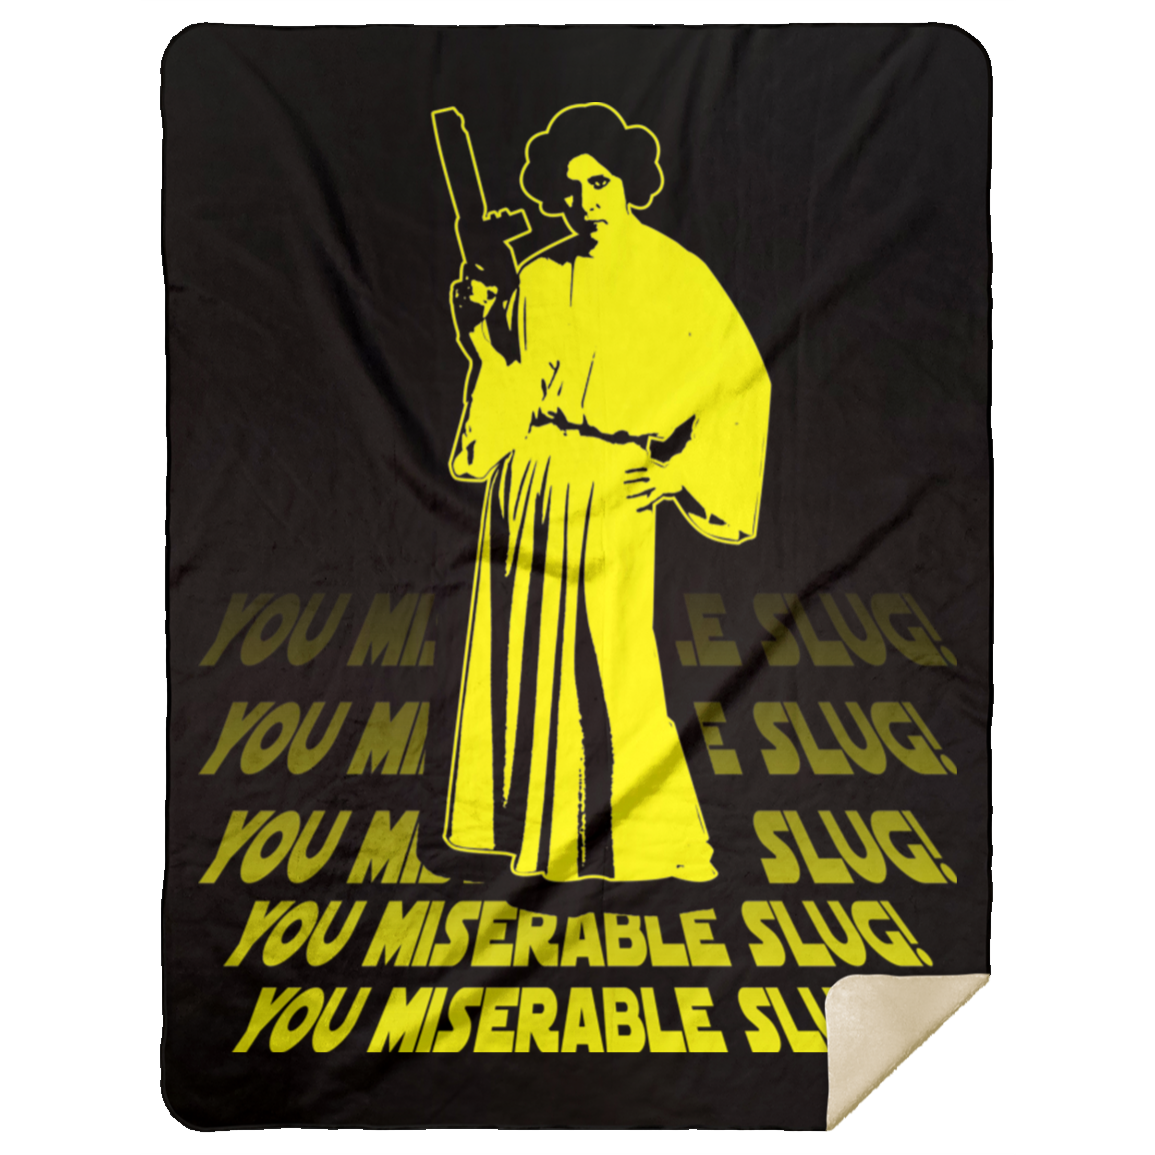 ArtichokeUSA Custom Design. You Miserable Slug. Carrie Fisher Tribute. Star Wars / Blues Brothers Fan Art. Parody. Mink Sherpa Blanket 60x80